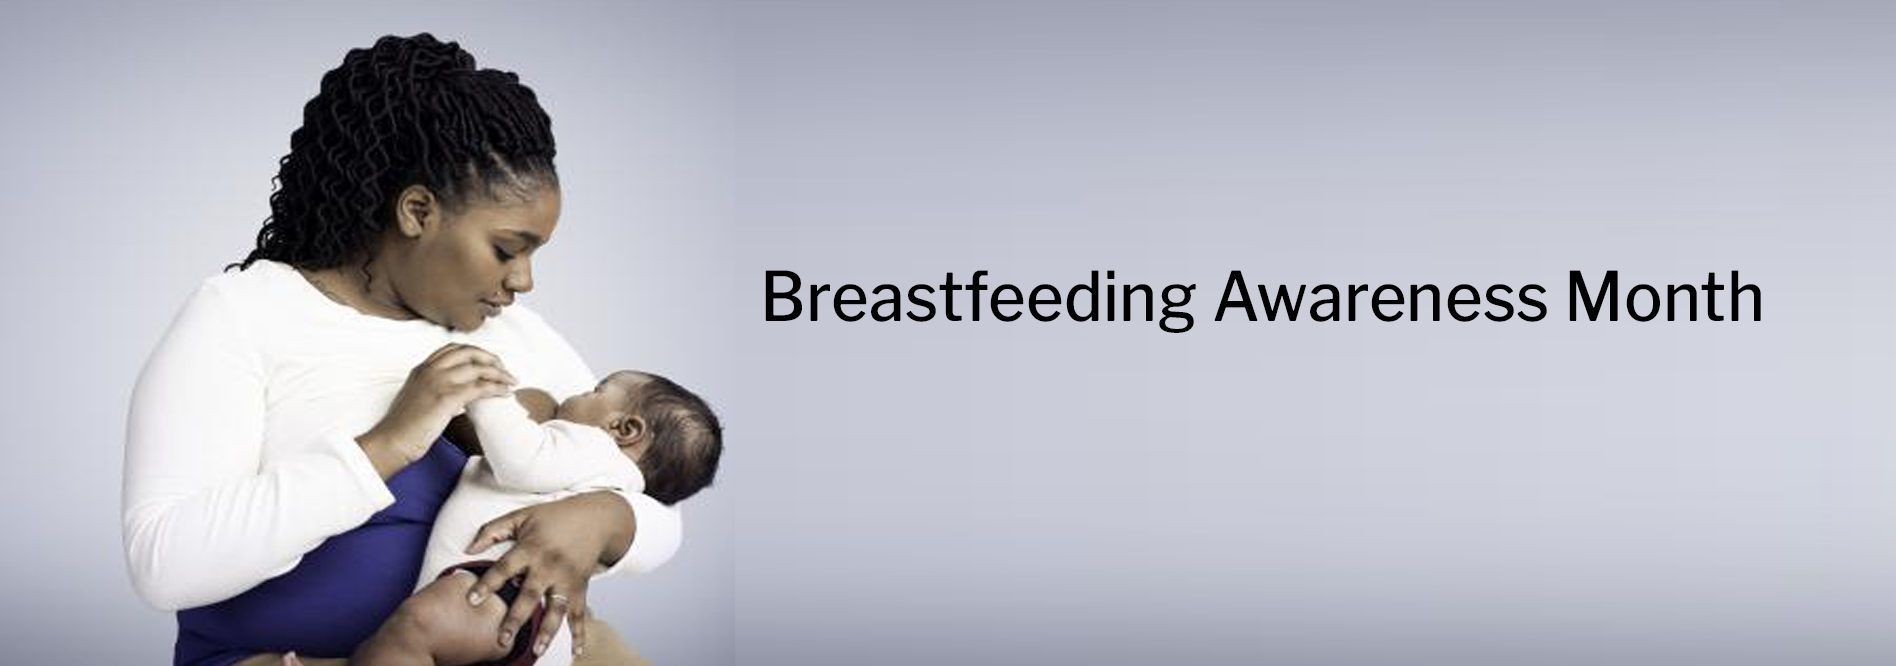 August: Breastfeeding Awareness Month